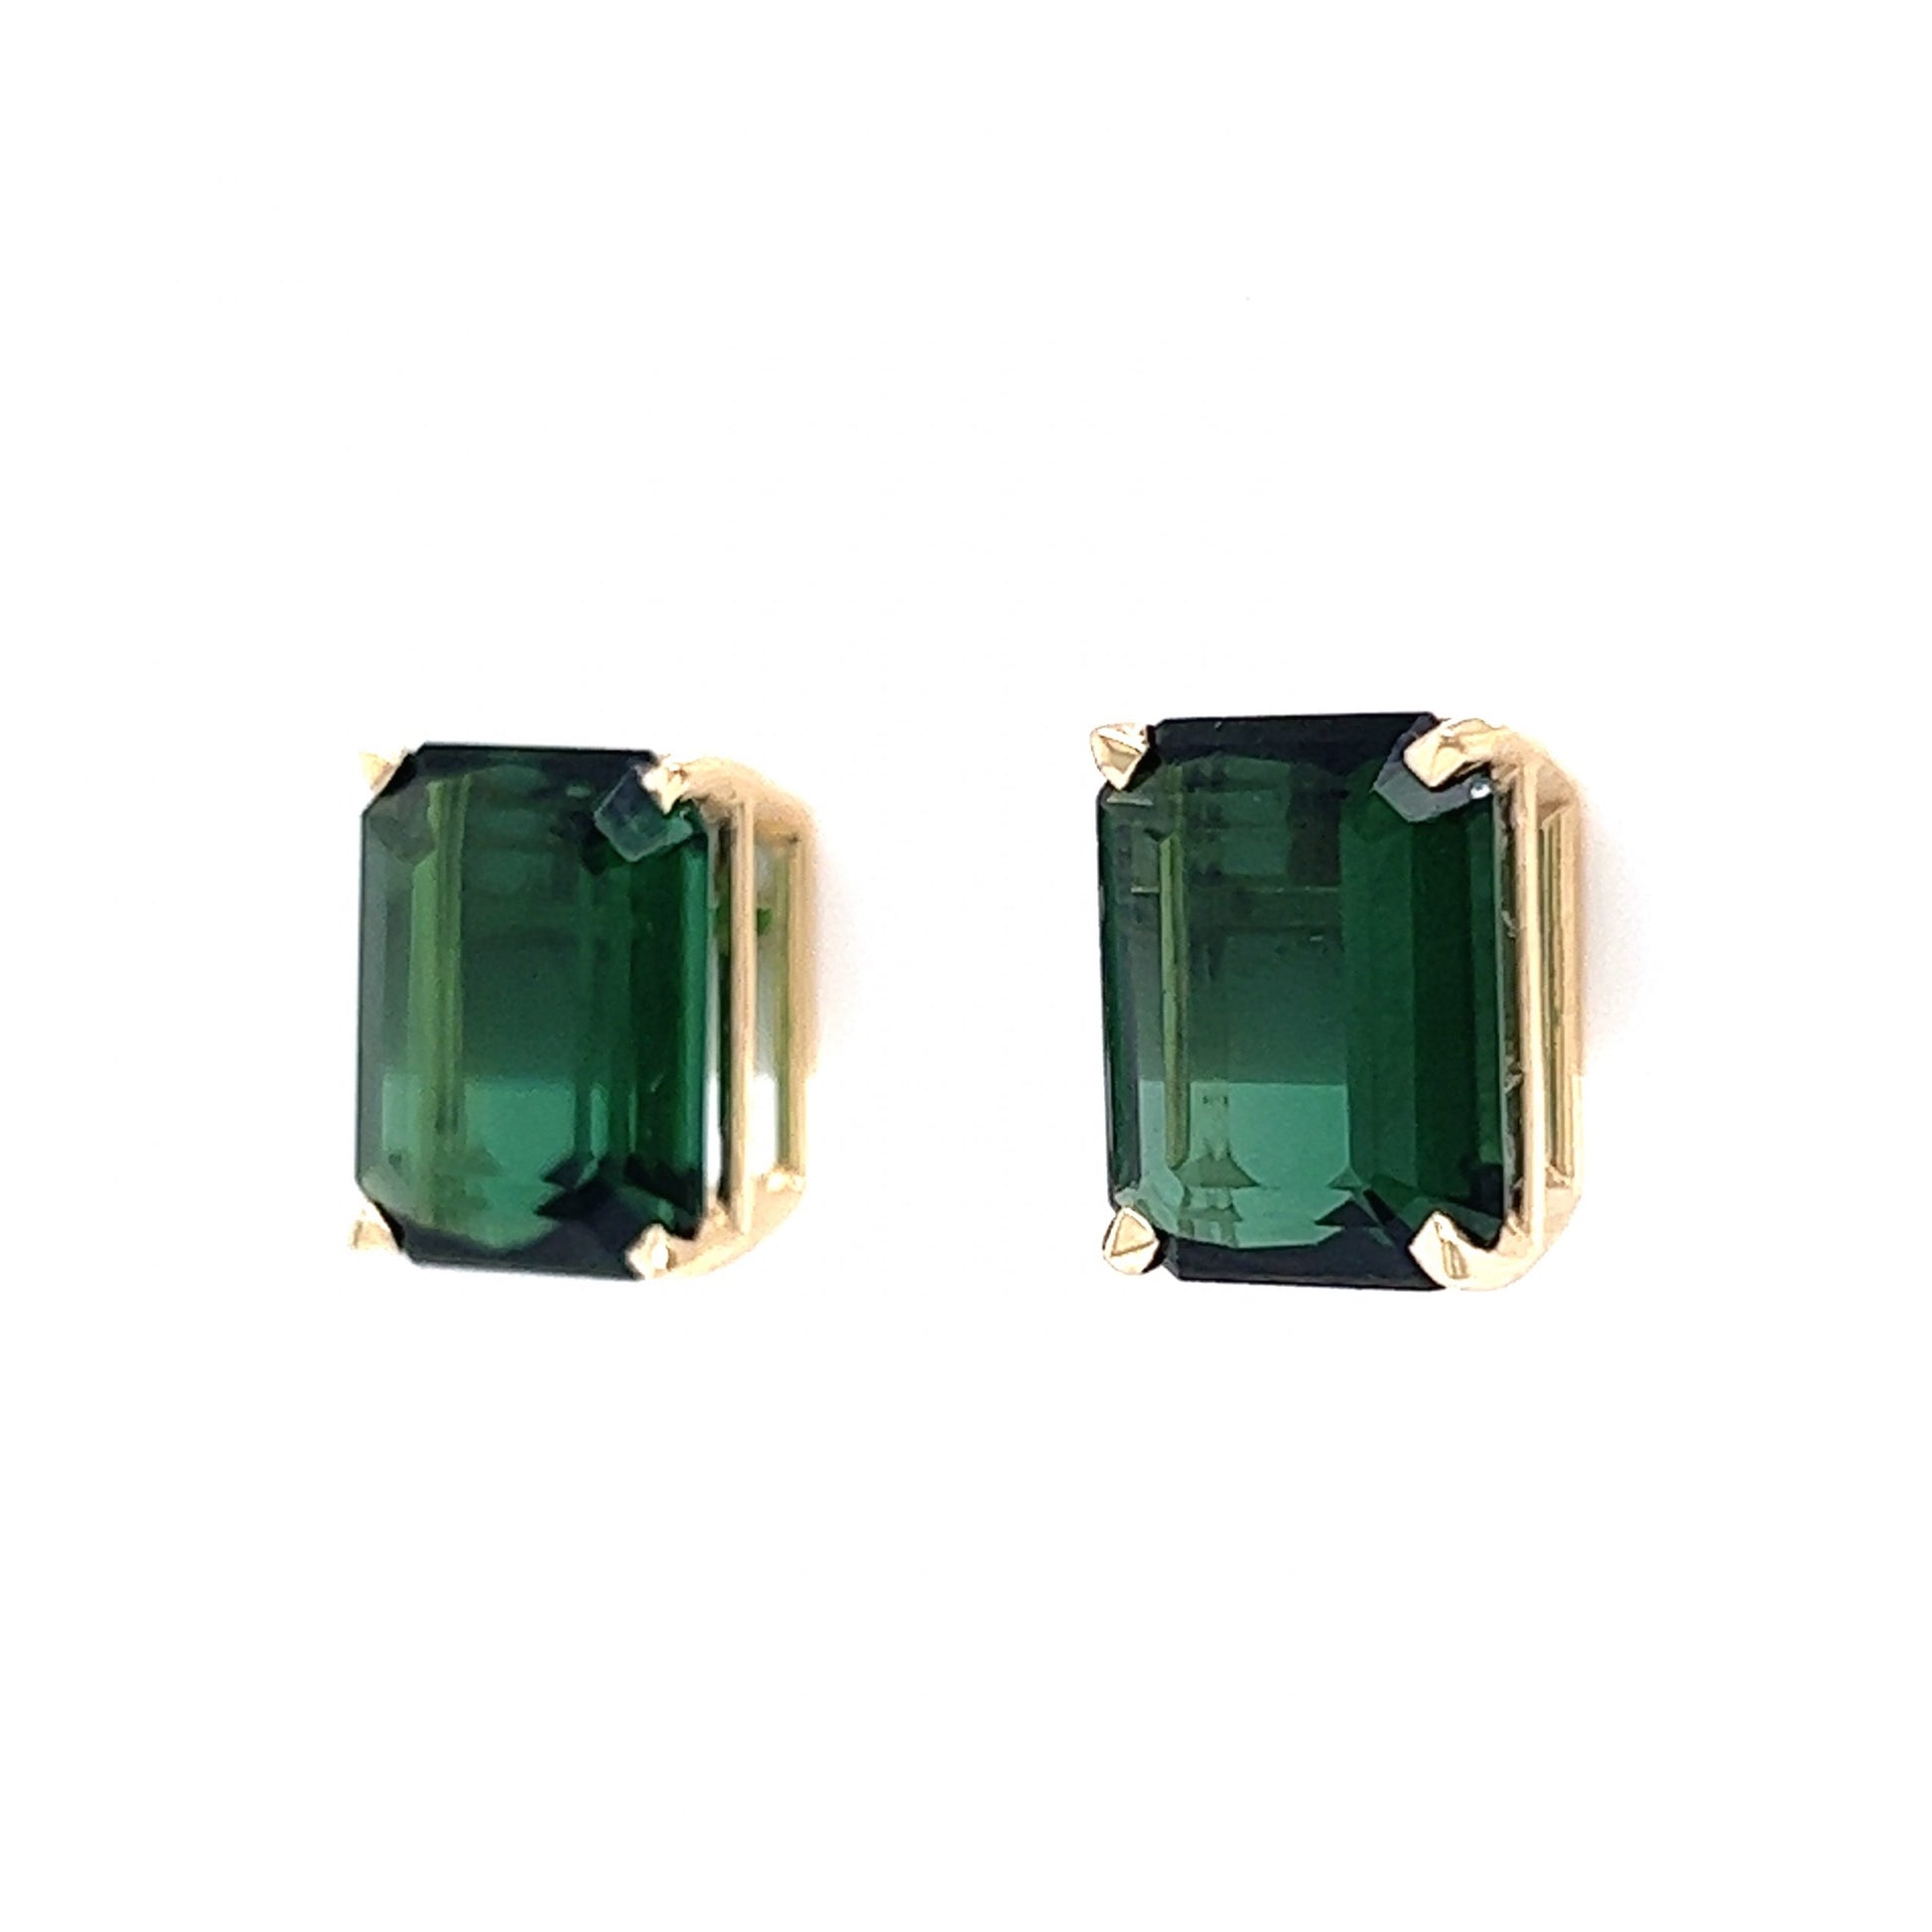 Elegant Emerald Cut Green Tourmaline Earrings in 14k Yellow Gold